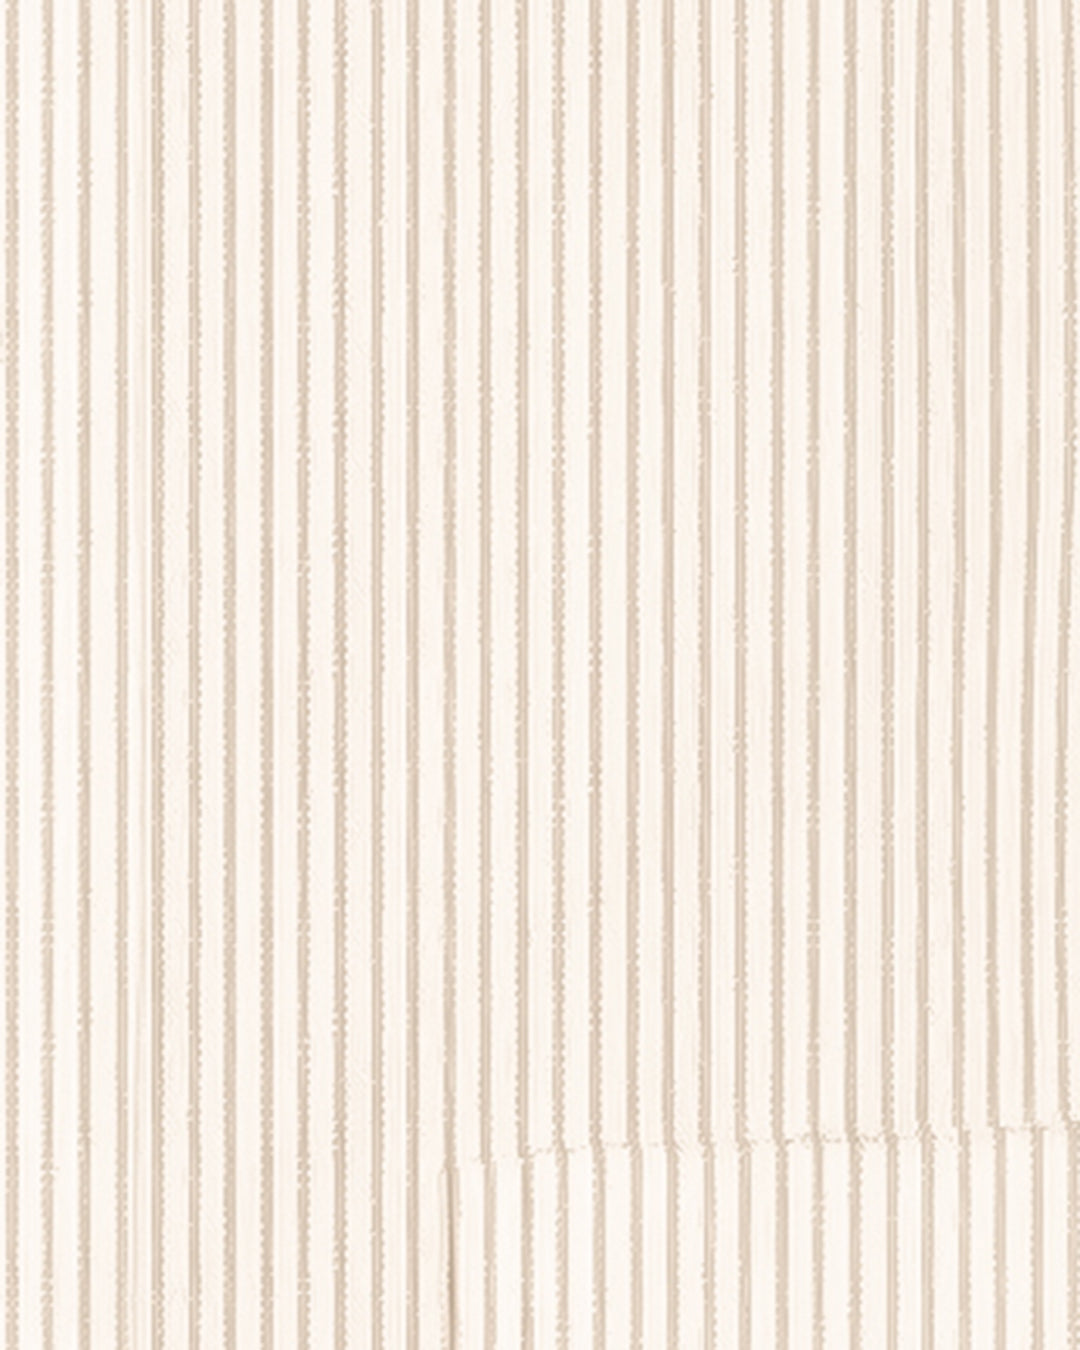 Cotton Linen: Fade Brown Dress Stripes On White